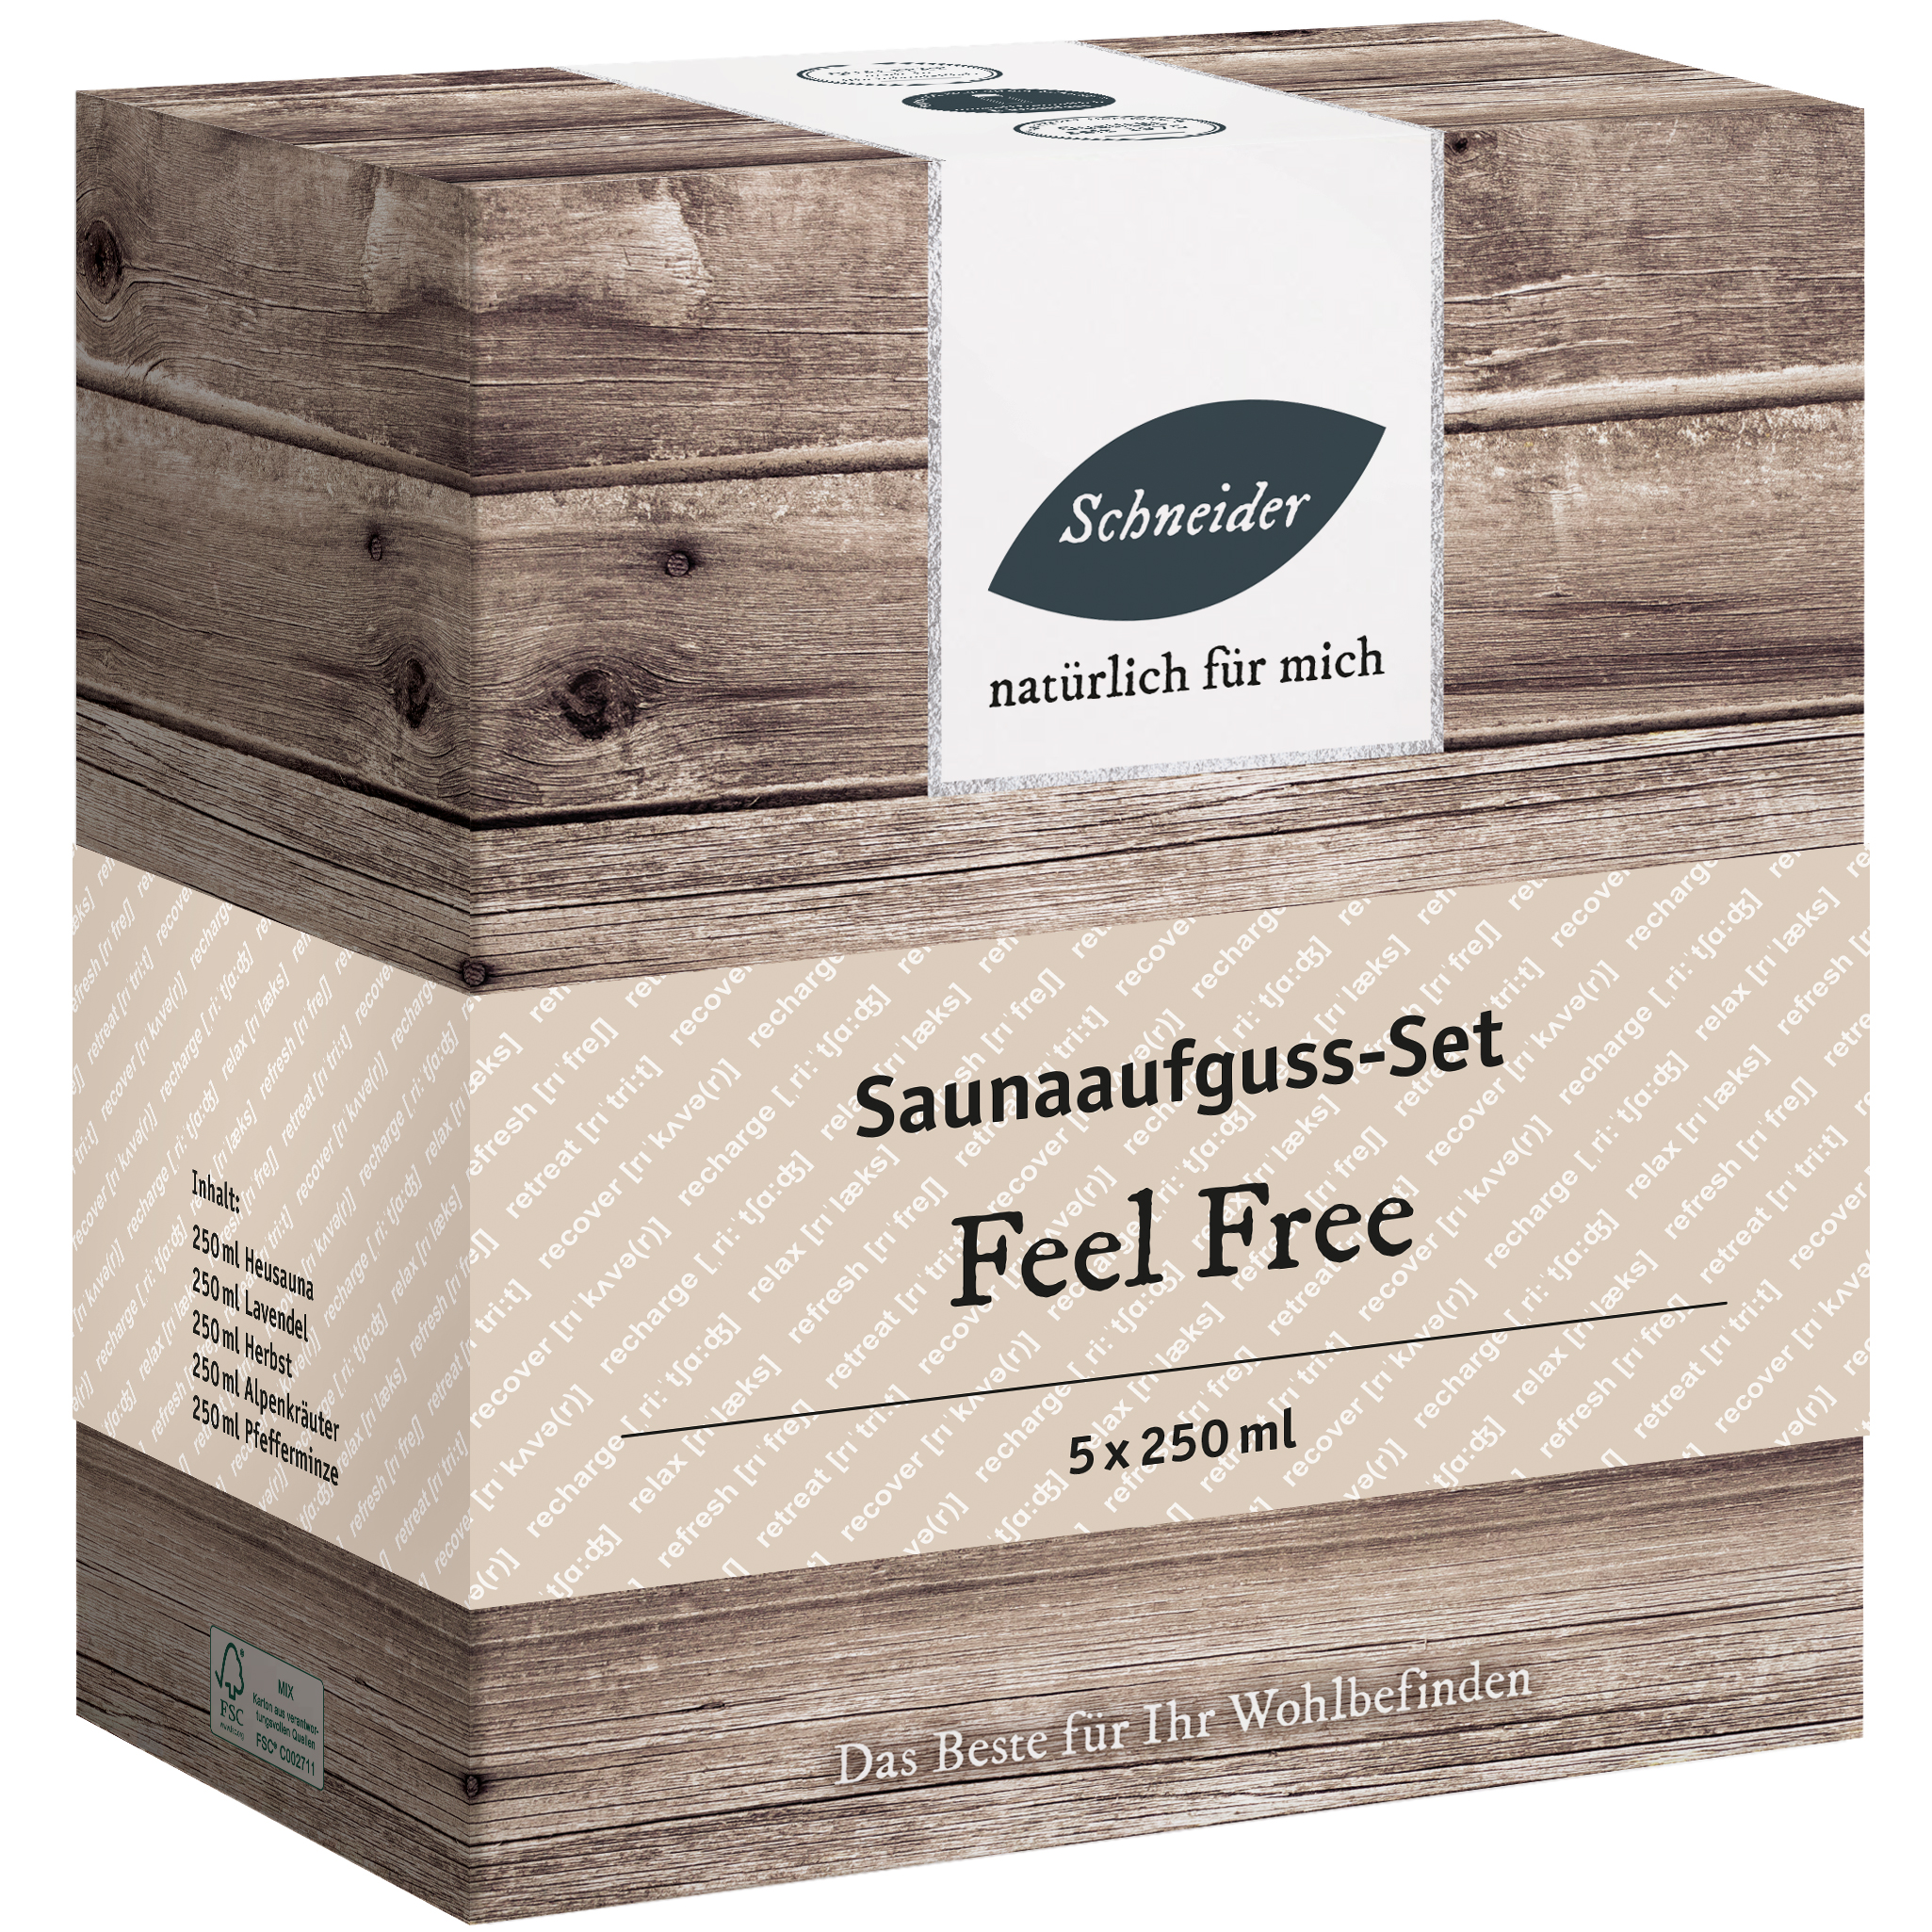 Saunaaufguss-Set - Feel Free